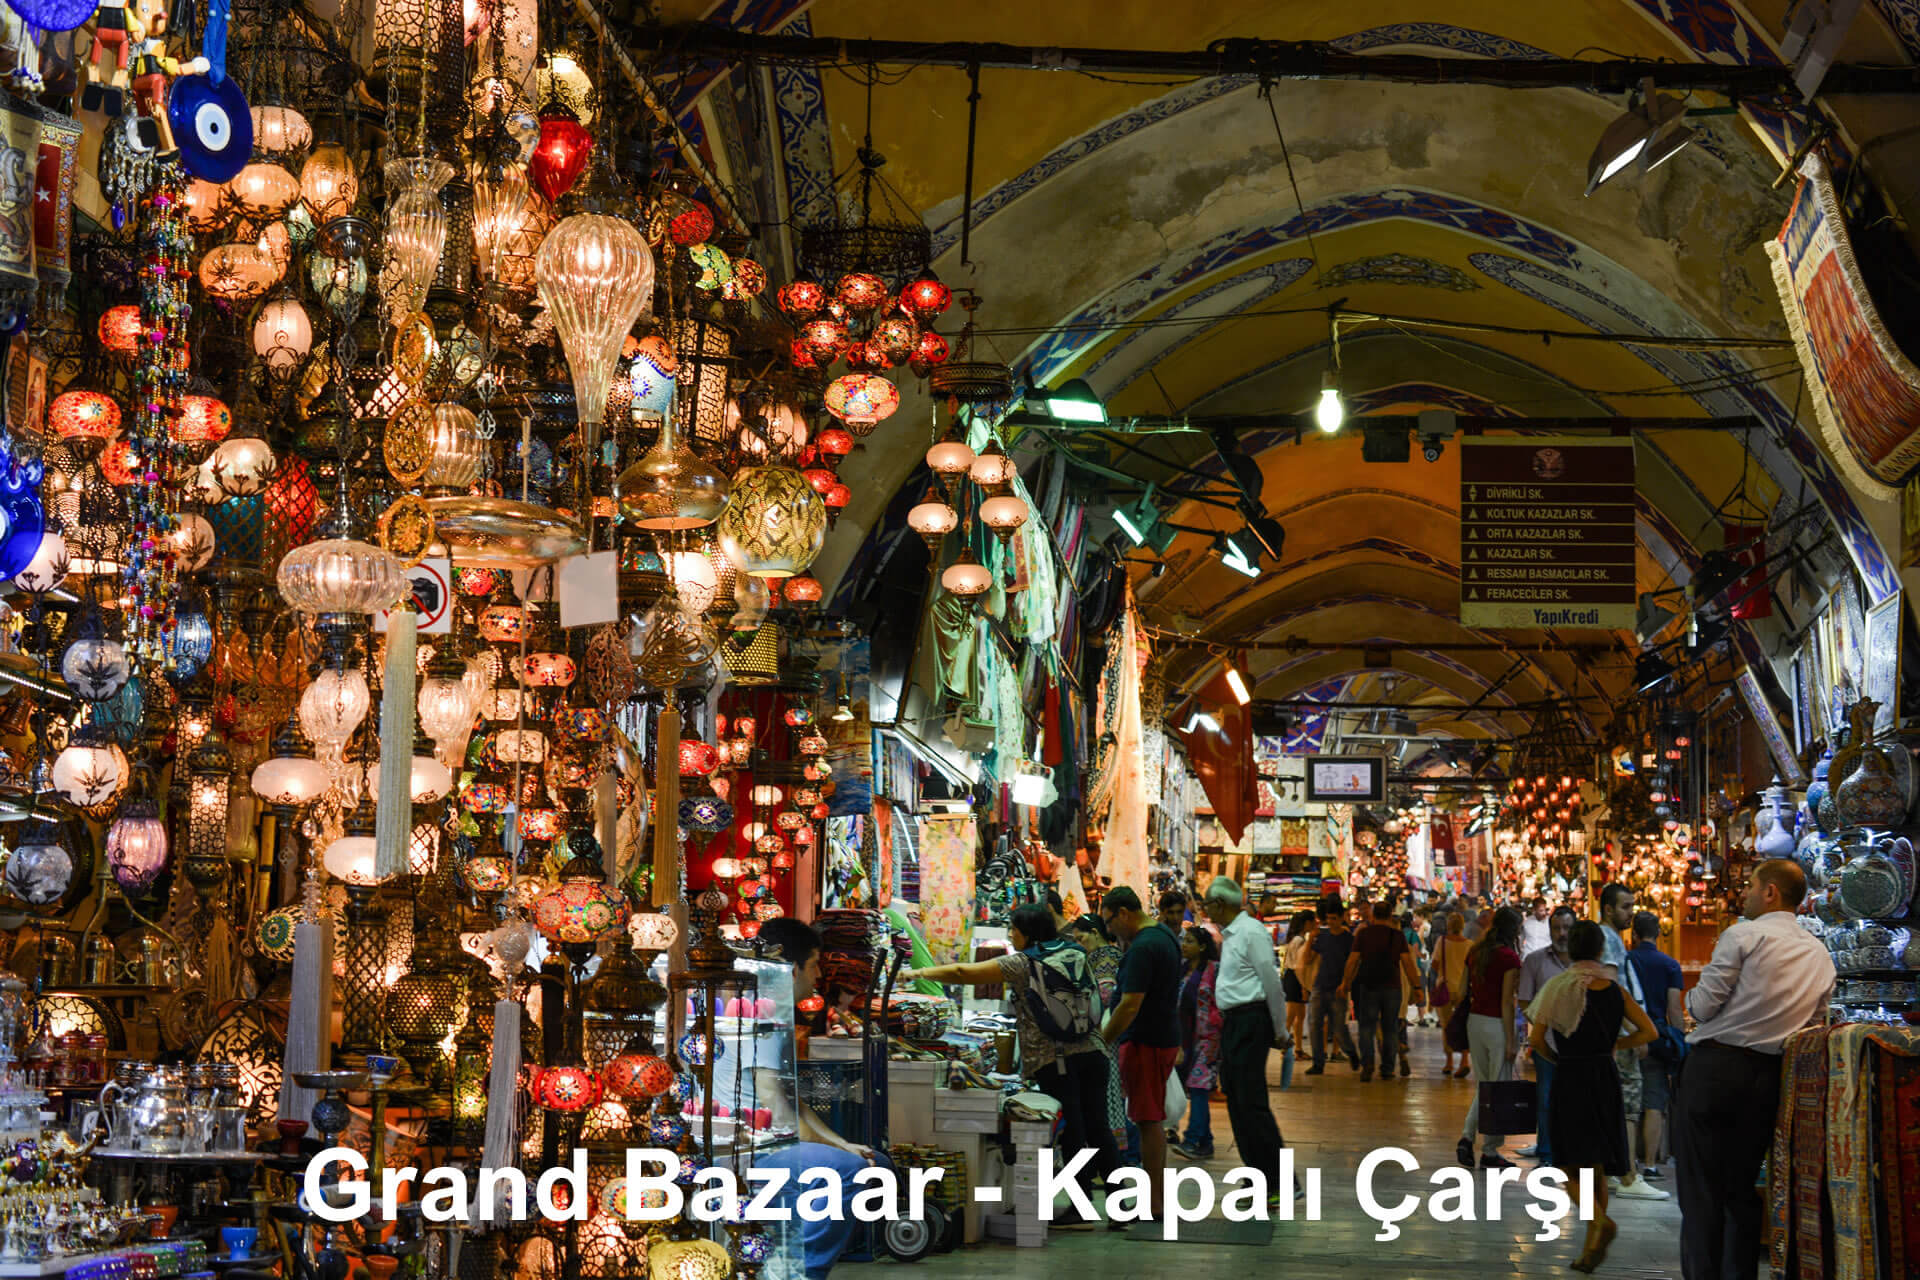 Grand Bazaar - Kapalı Çarşı